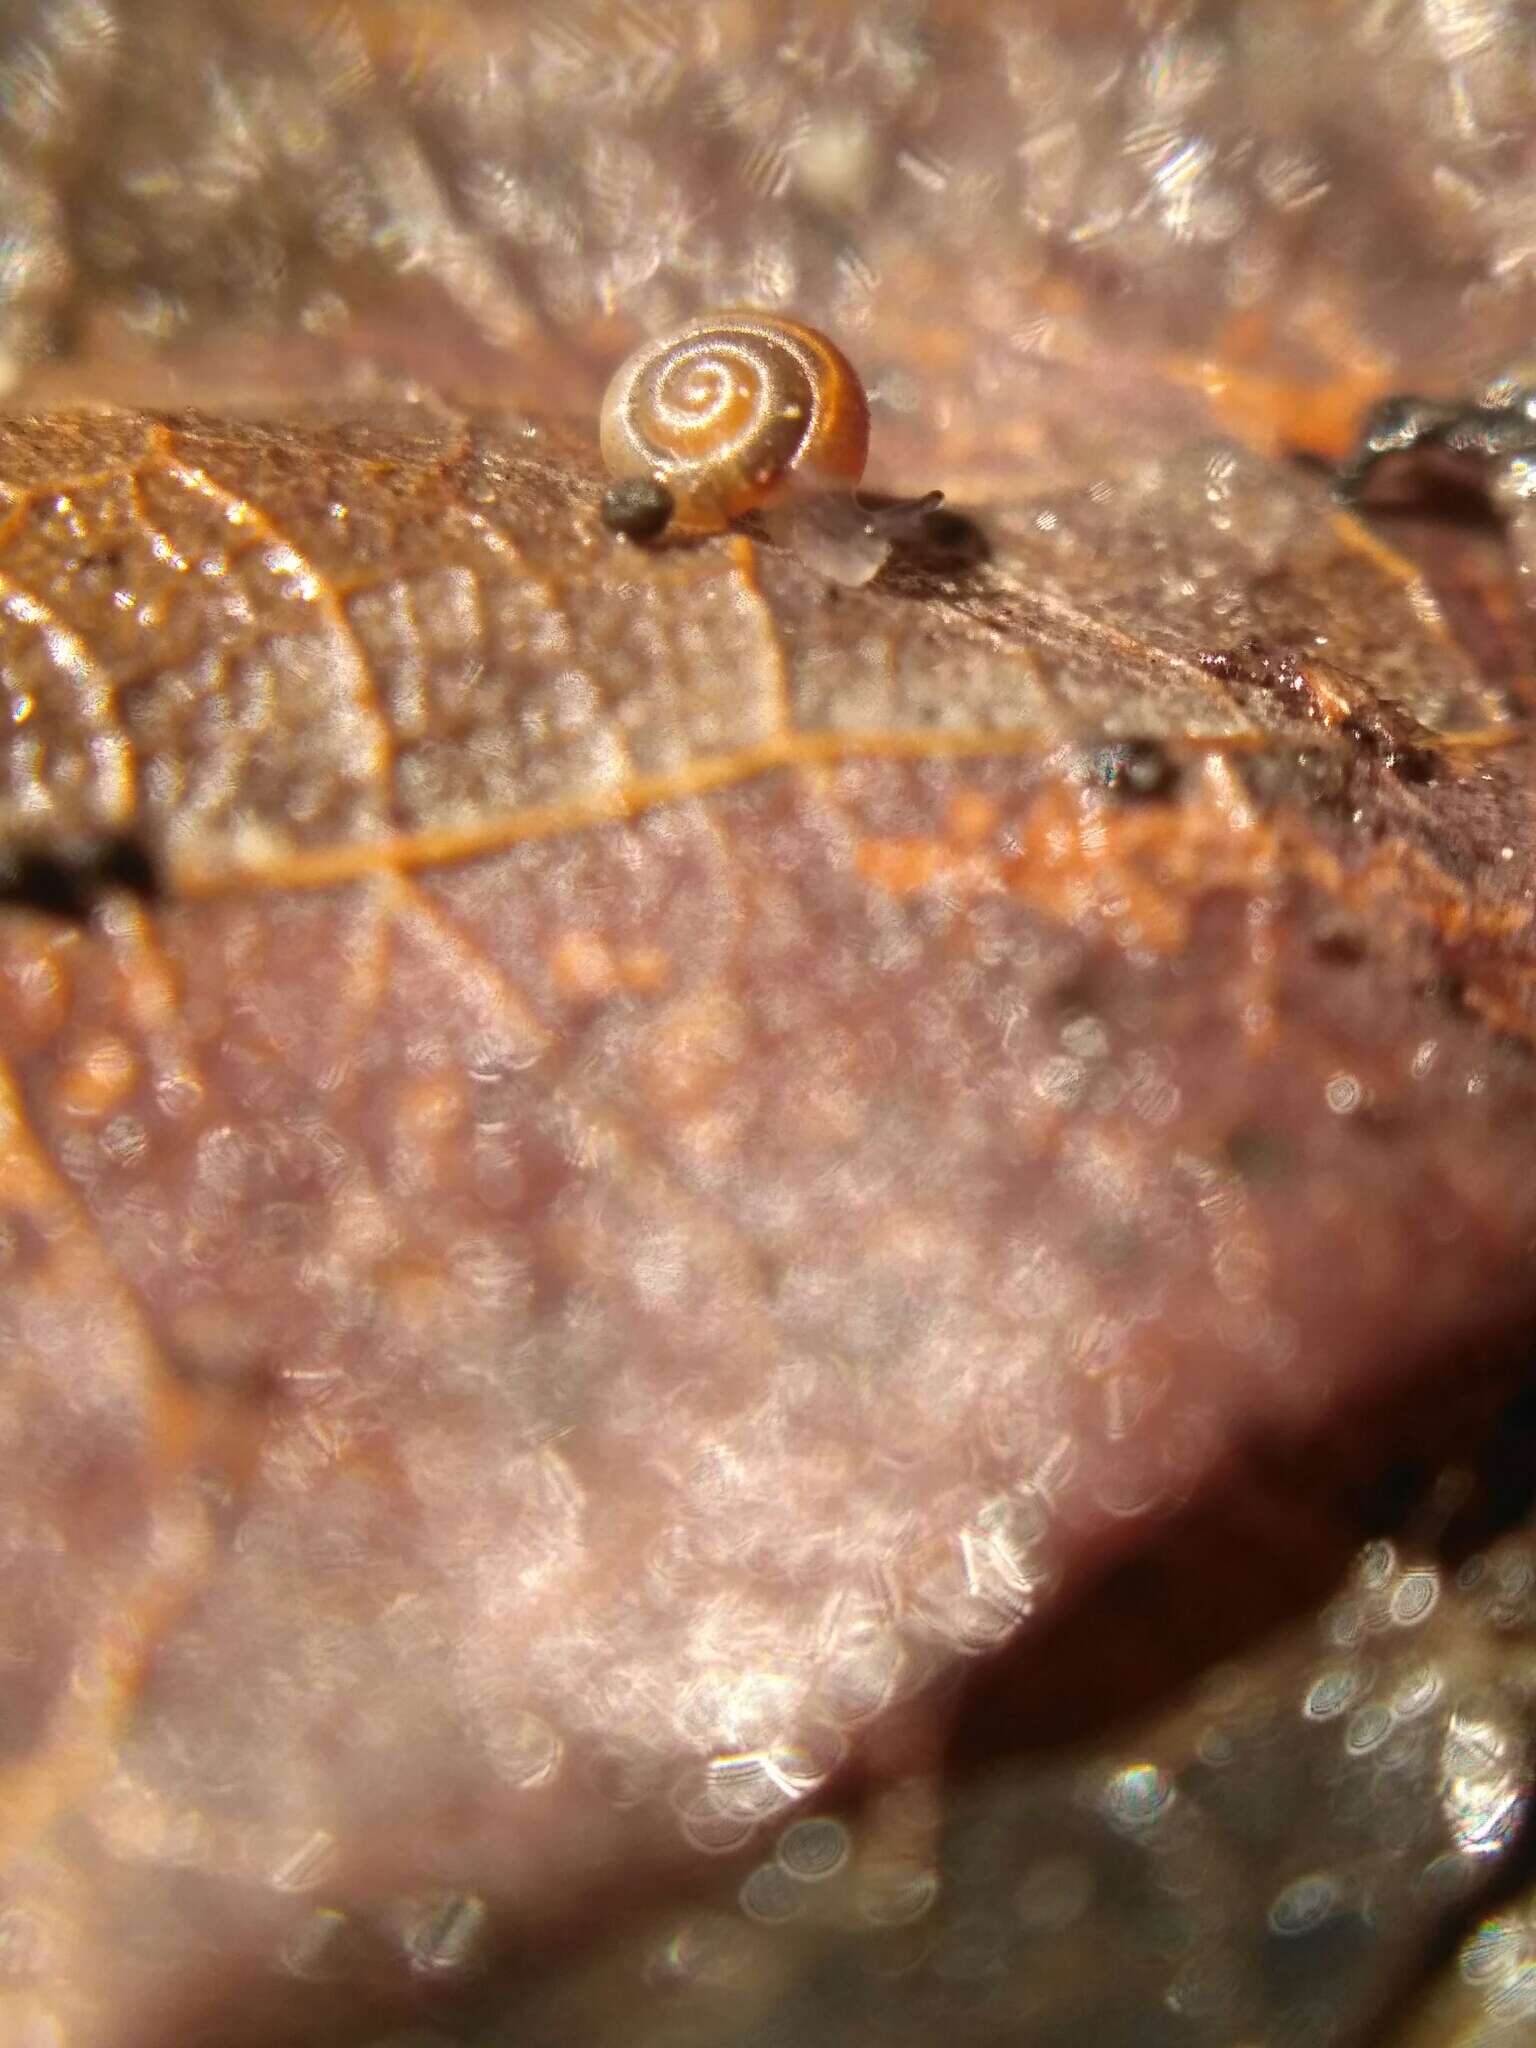 Image of dwarf snail